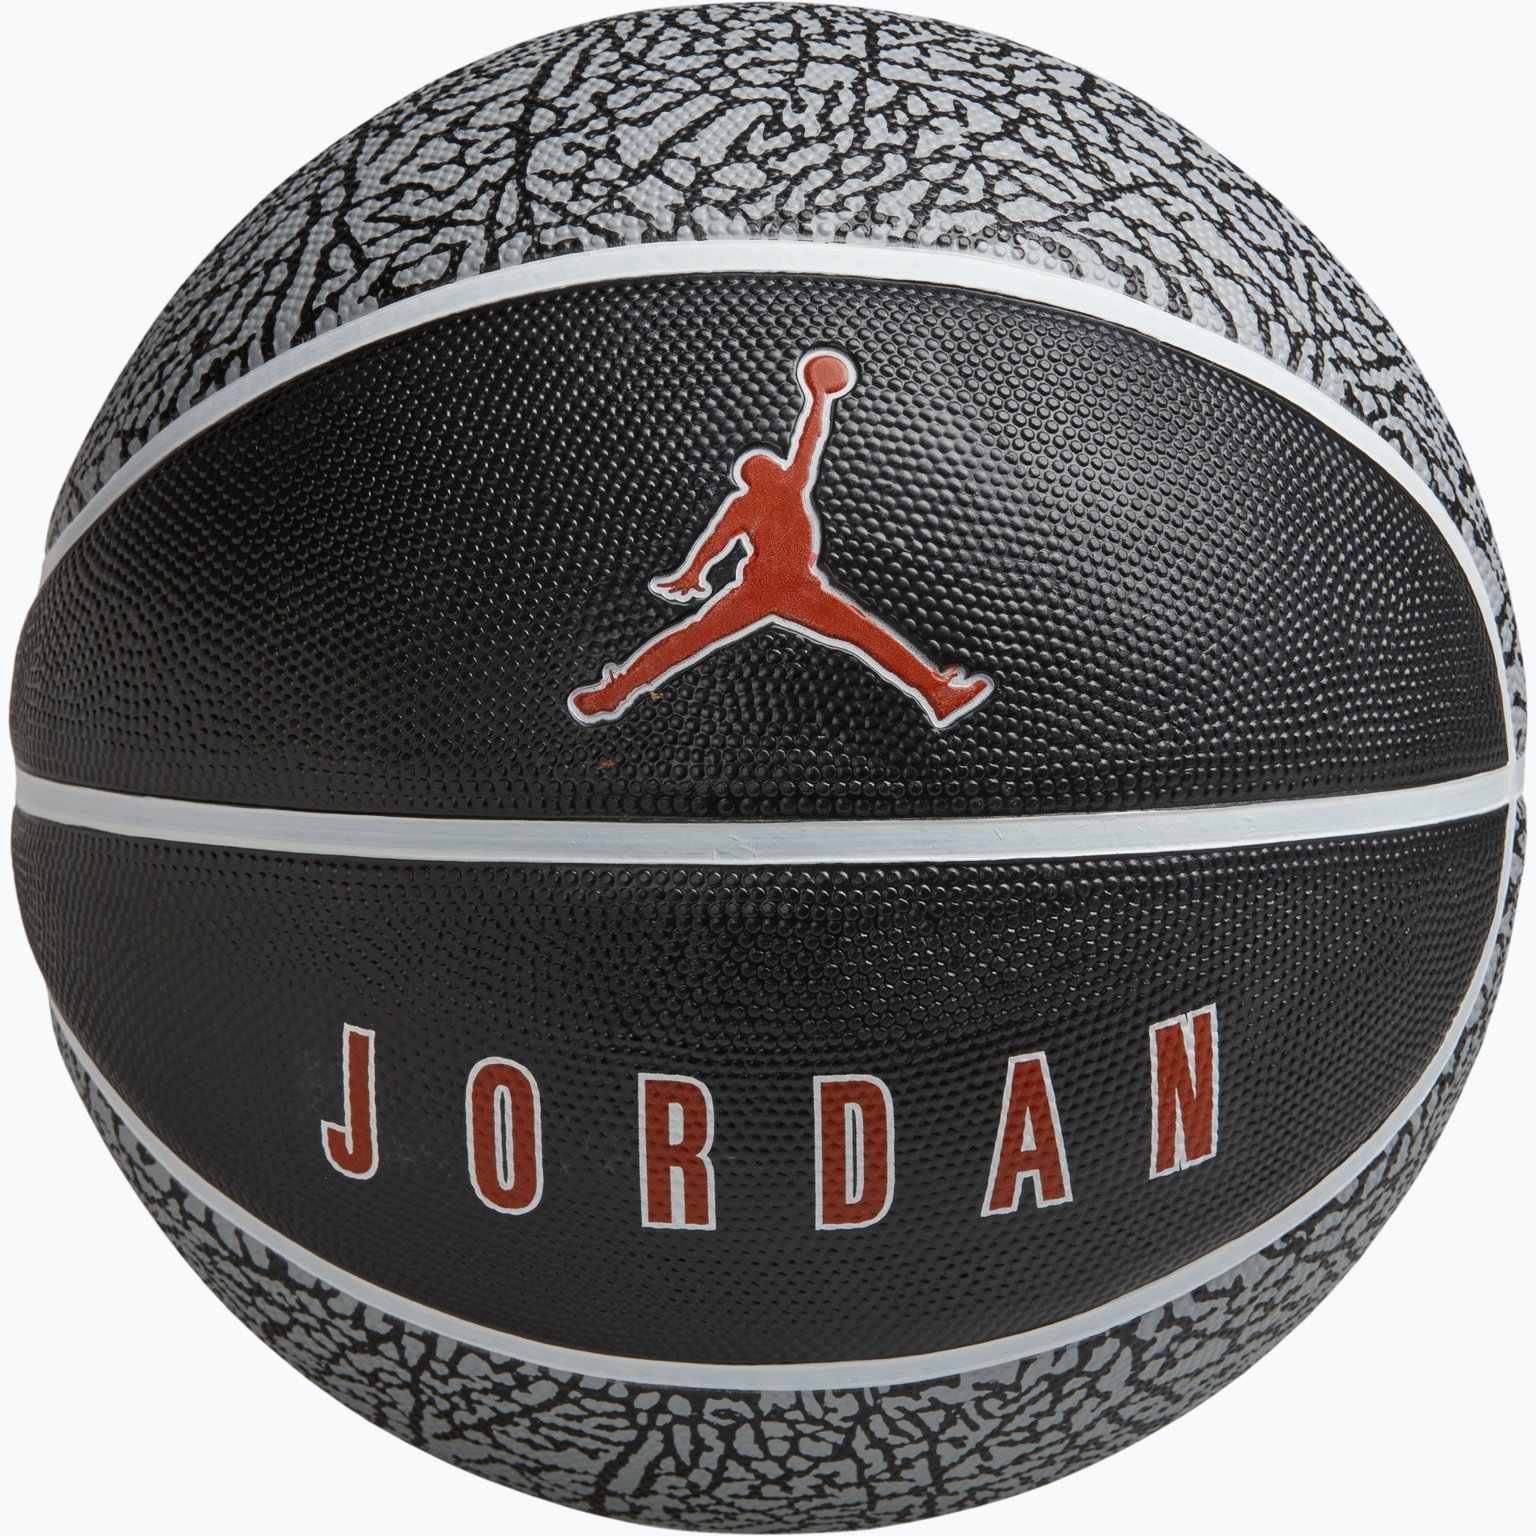 Jordan Playground 2.0 8P basketboll